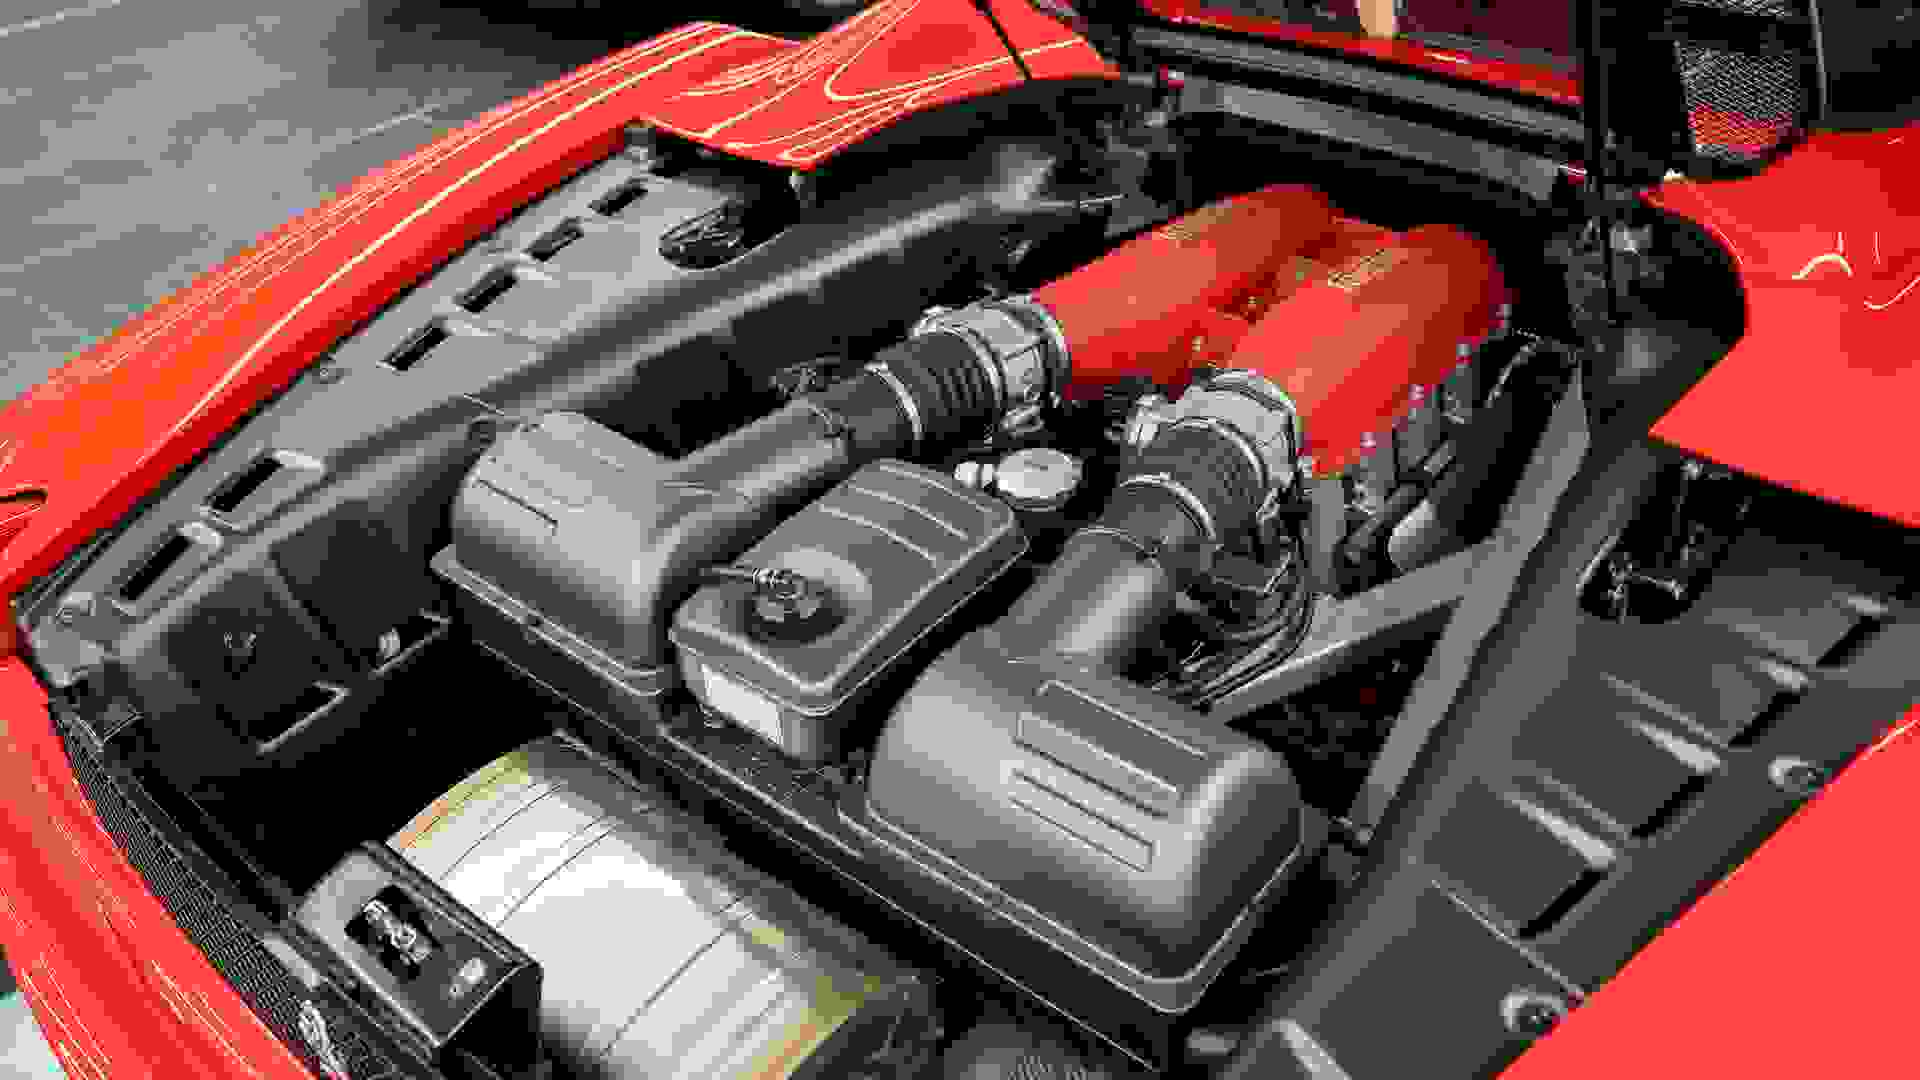 Ferrari F430 Photo 59c3d034-9eb6-415d-9266-e7f017d0ea15.jpg